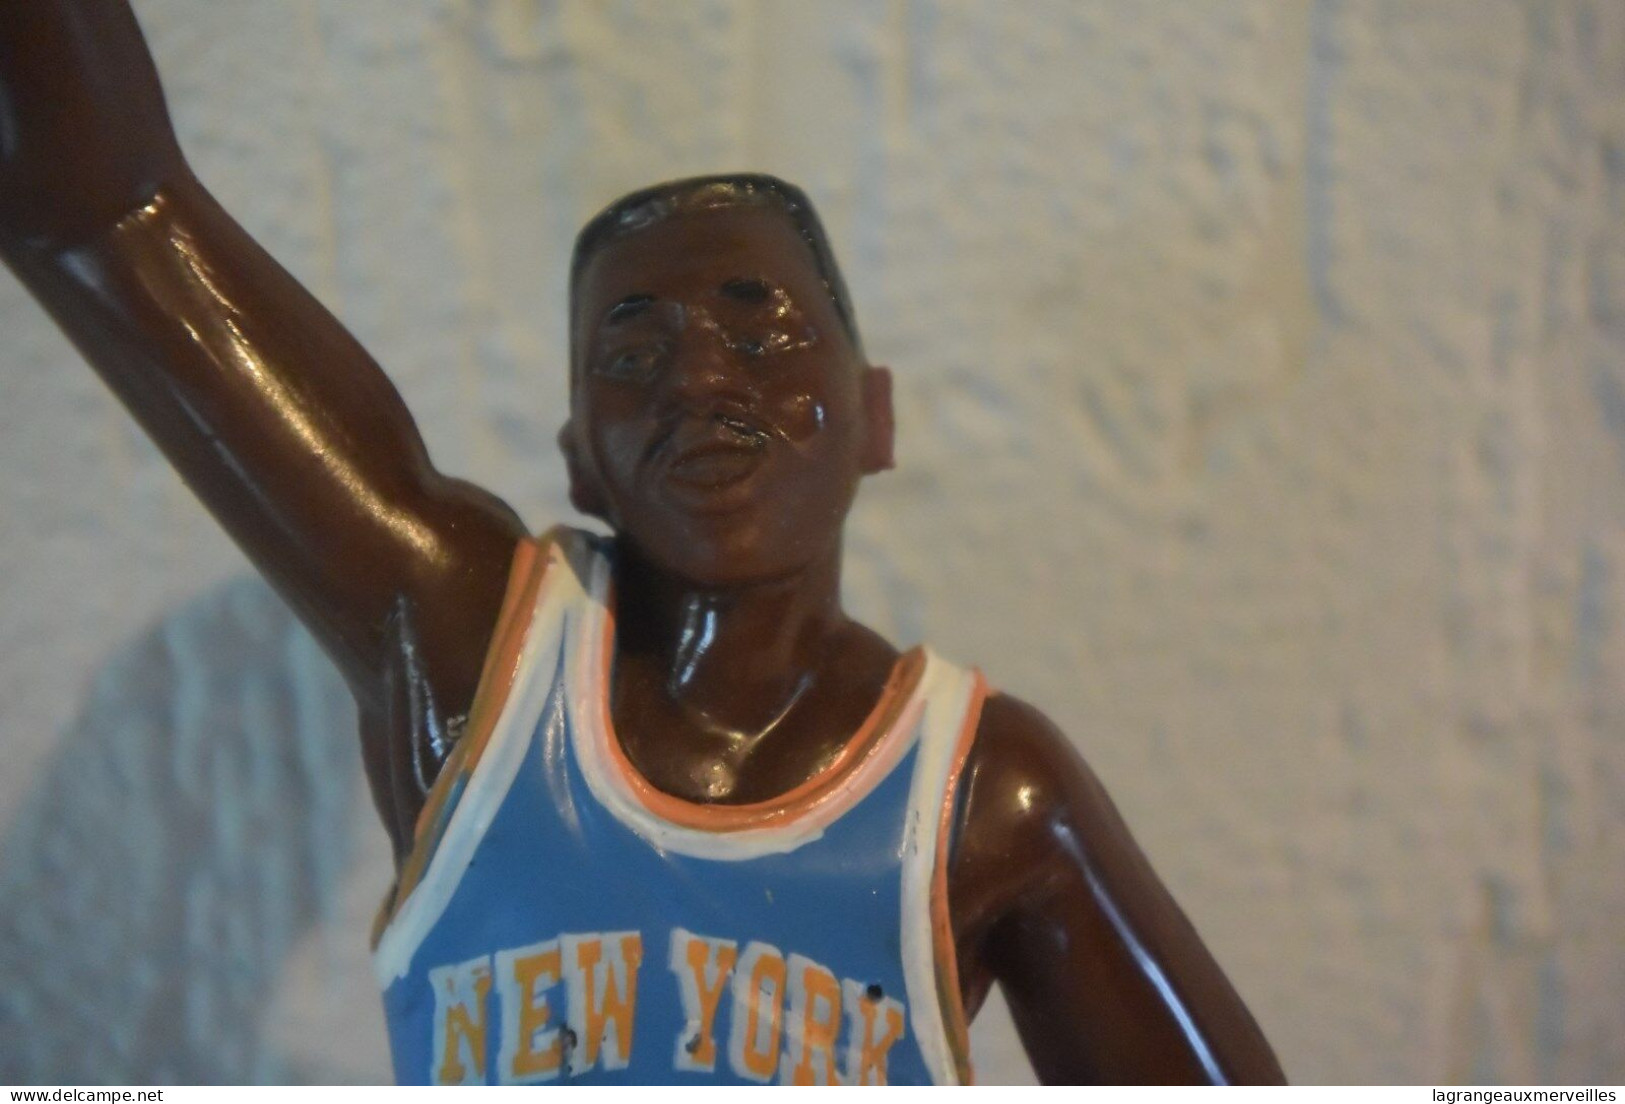 C109 Figurine Patrick Ewing 33 Basket 1987 NBA - Videospelen